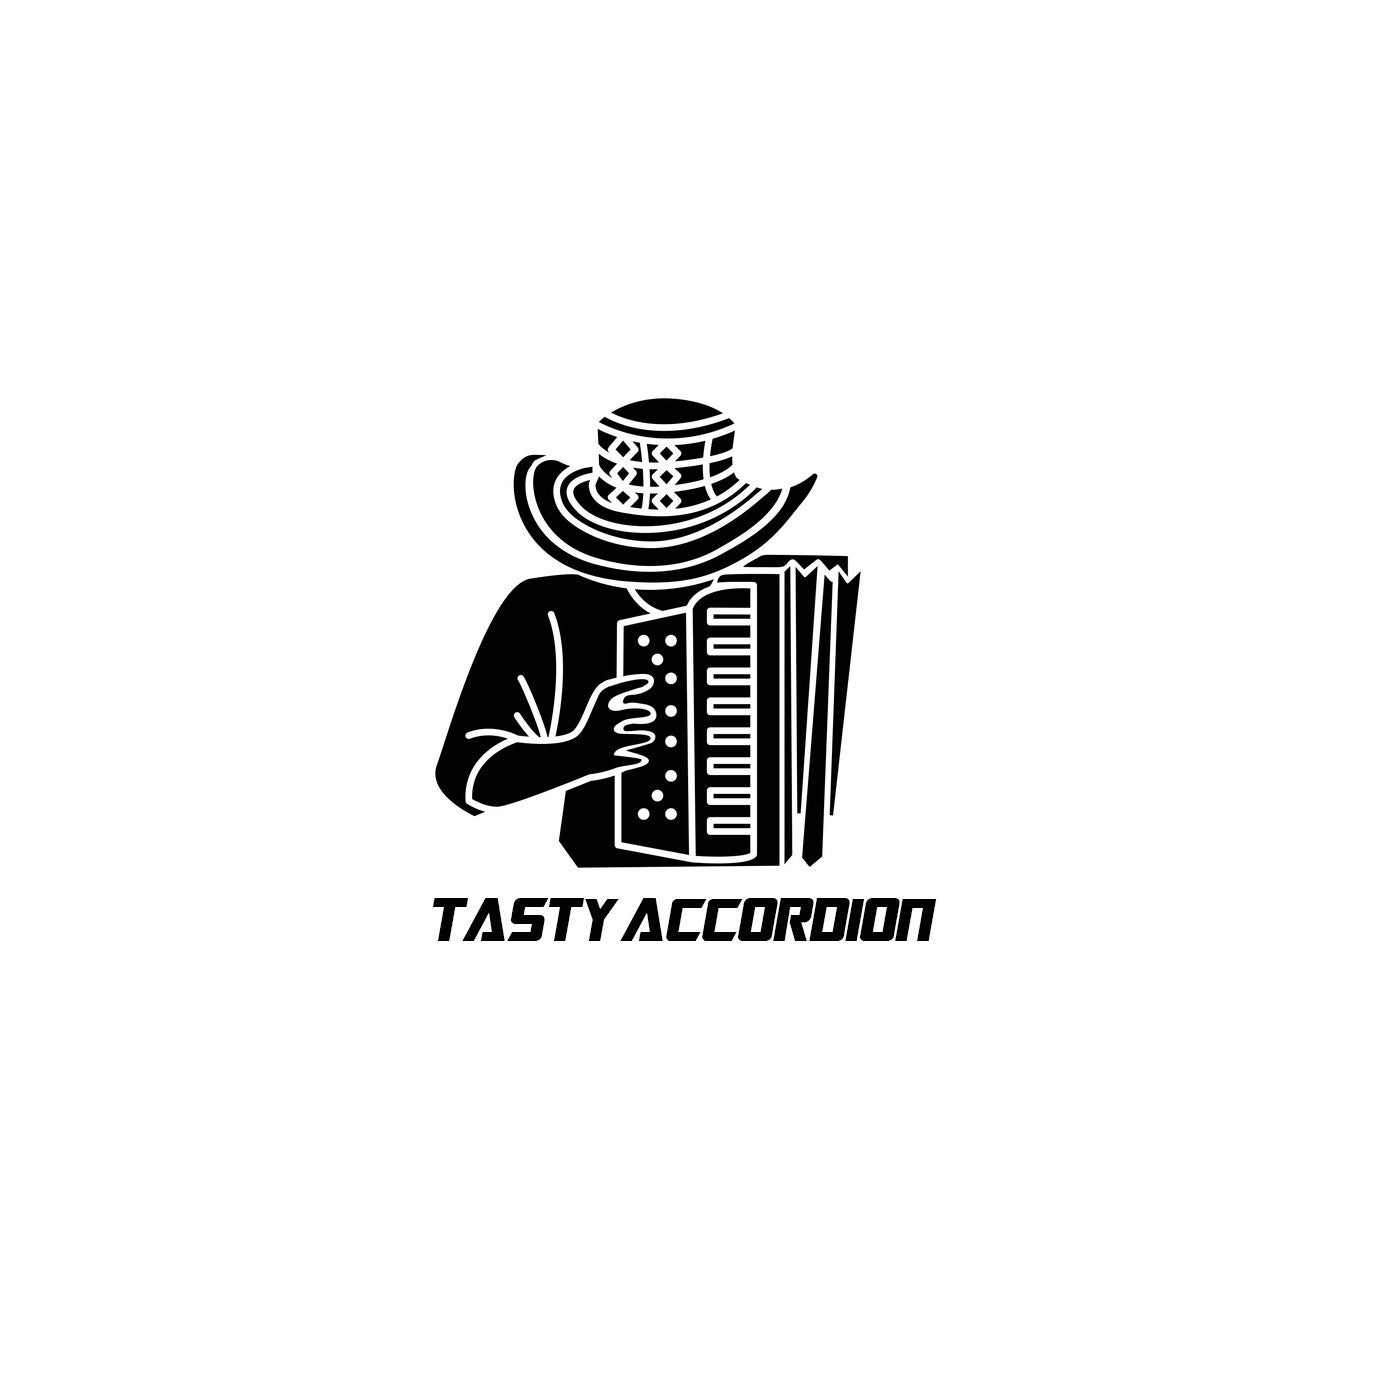 Tasty Accordion